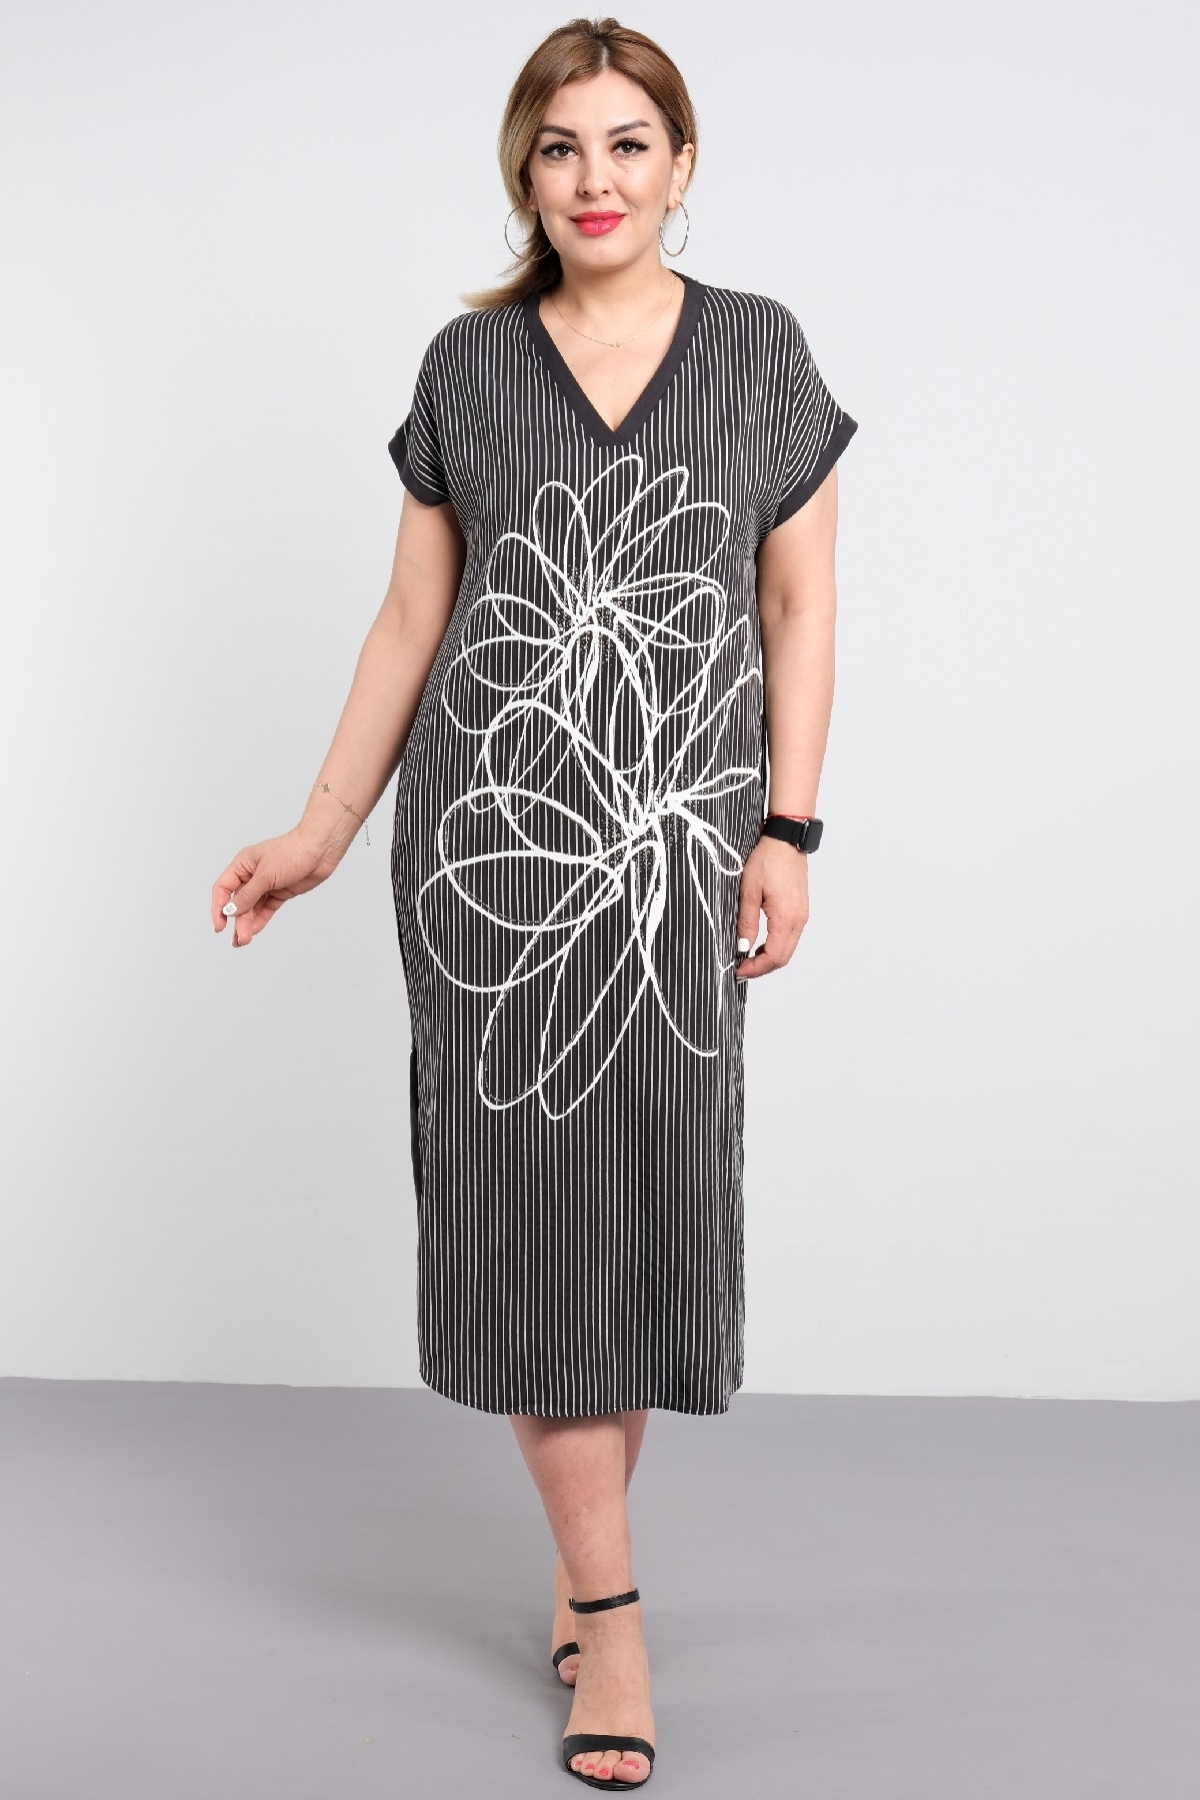 V-neck short sleeve midi length digital print elegant plus size dress with floral image